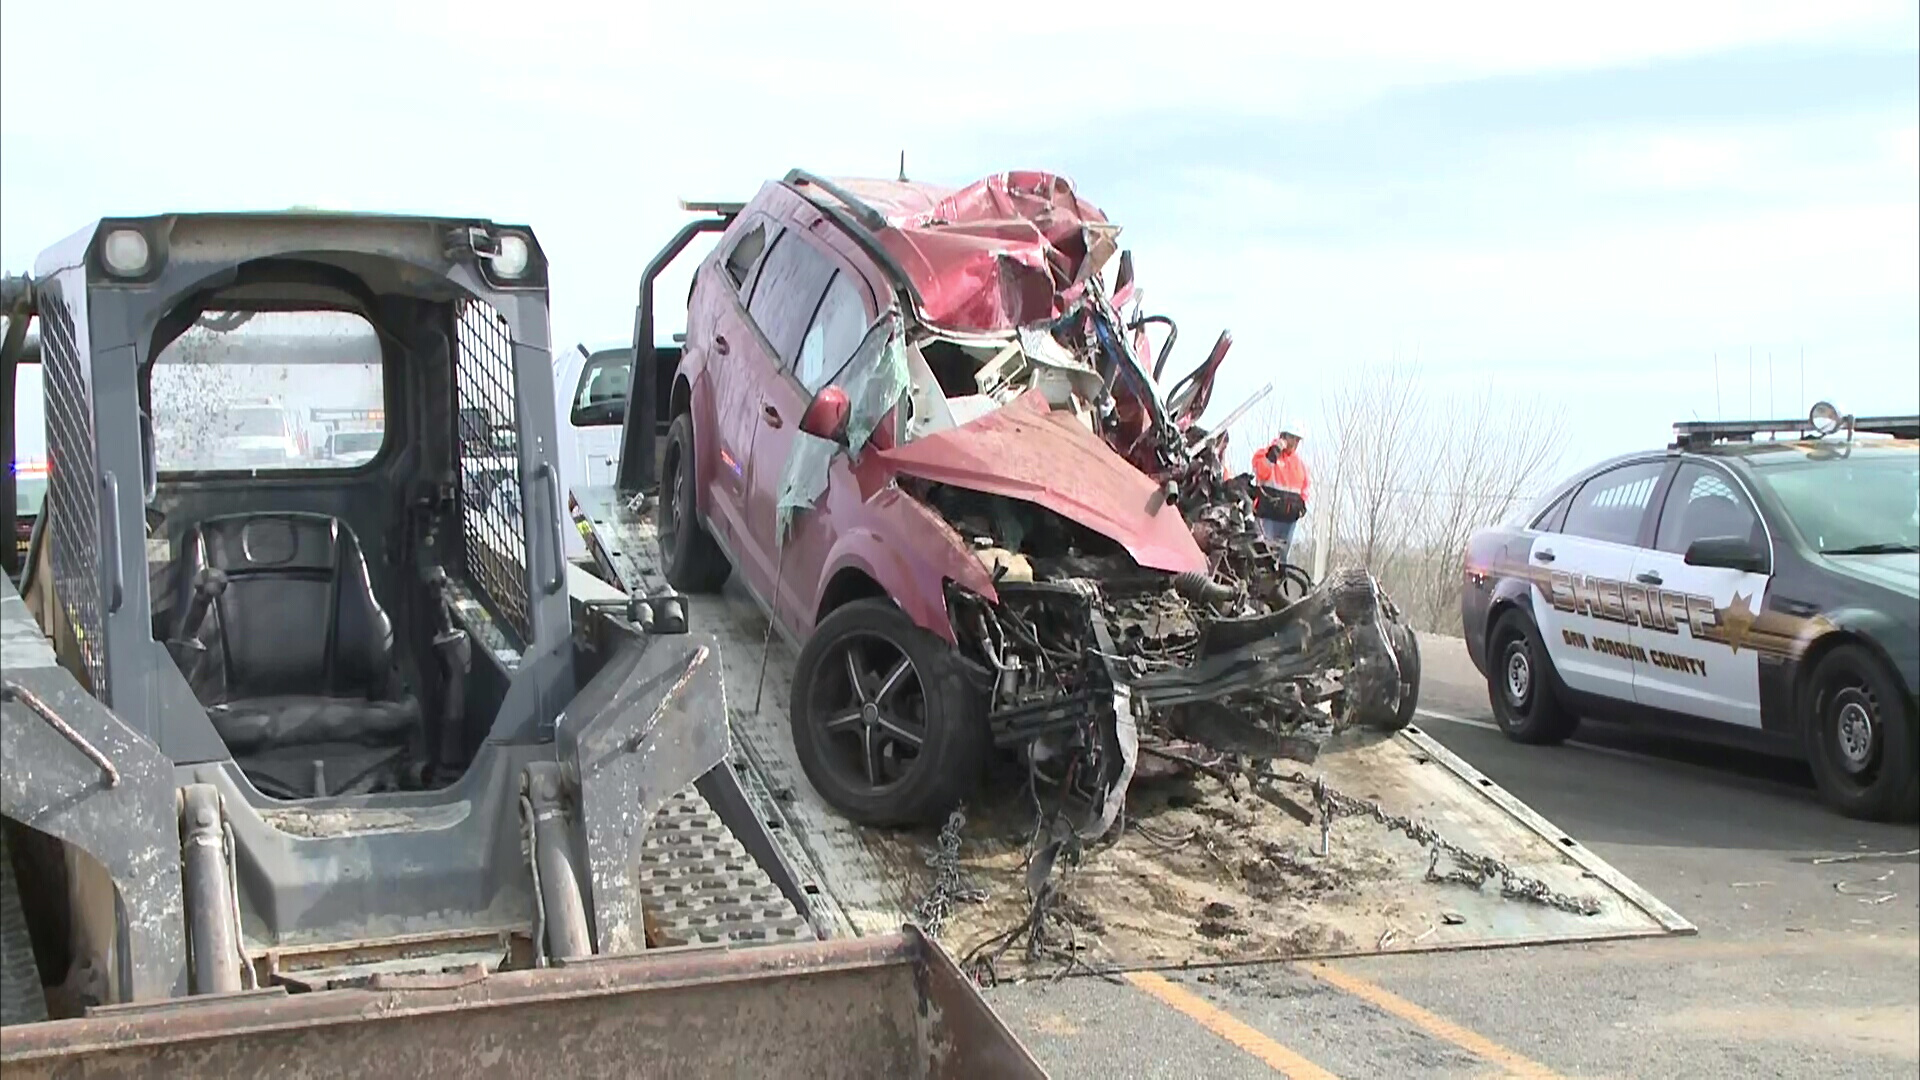 Scene of a fatal crash involving a big-rig and SUV on Highway 4 near Discovery Bay on February 14, 2020. (CBS Sacramento)